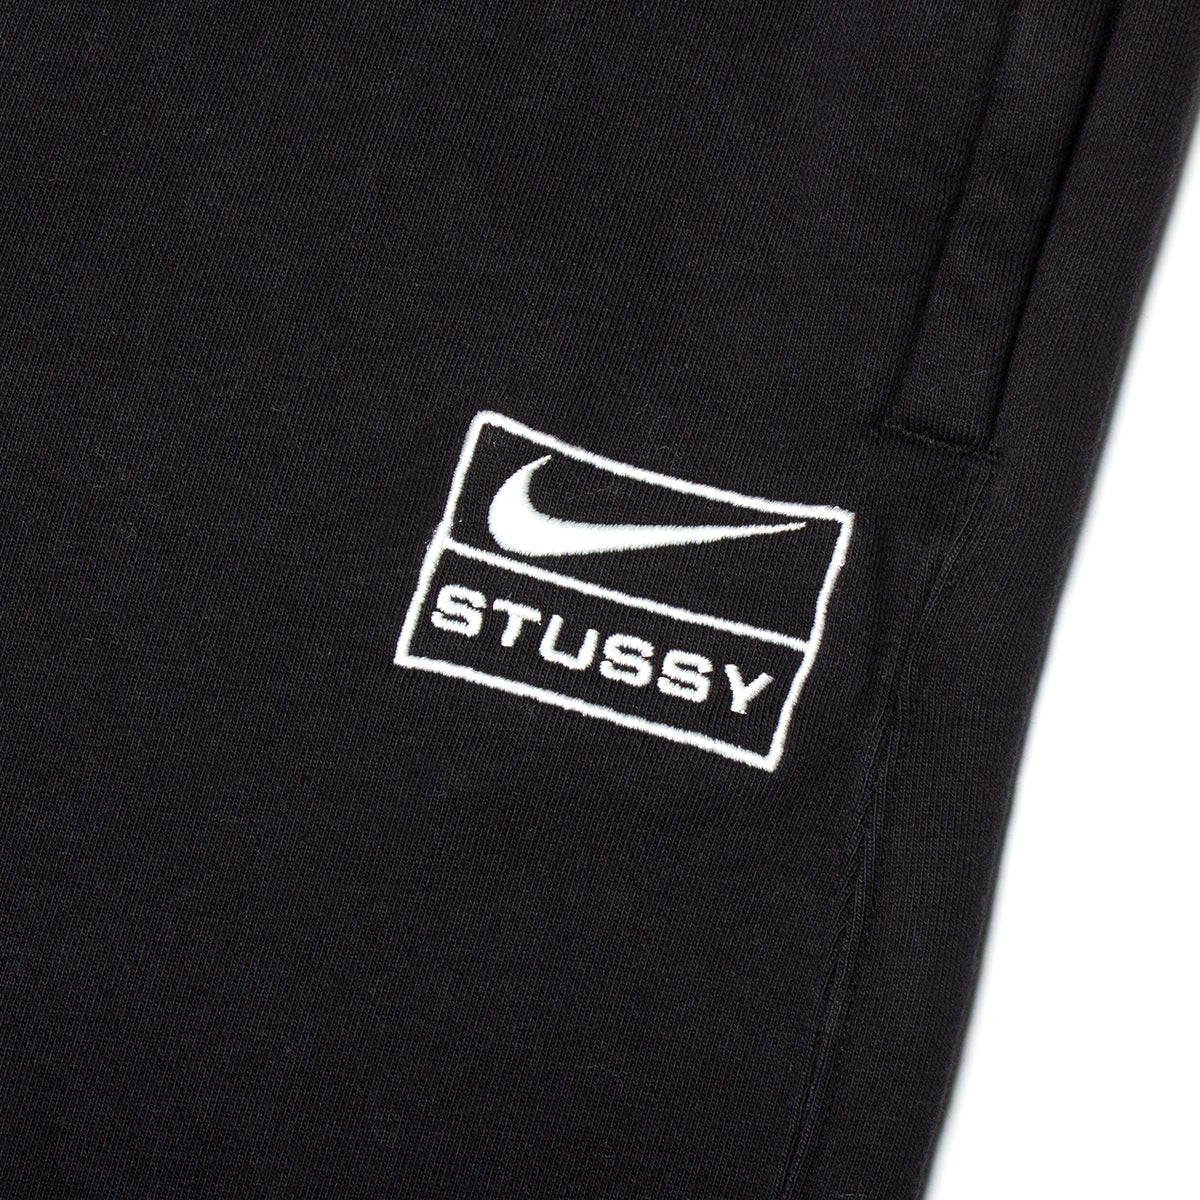 Stussy Nike Pants